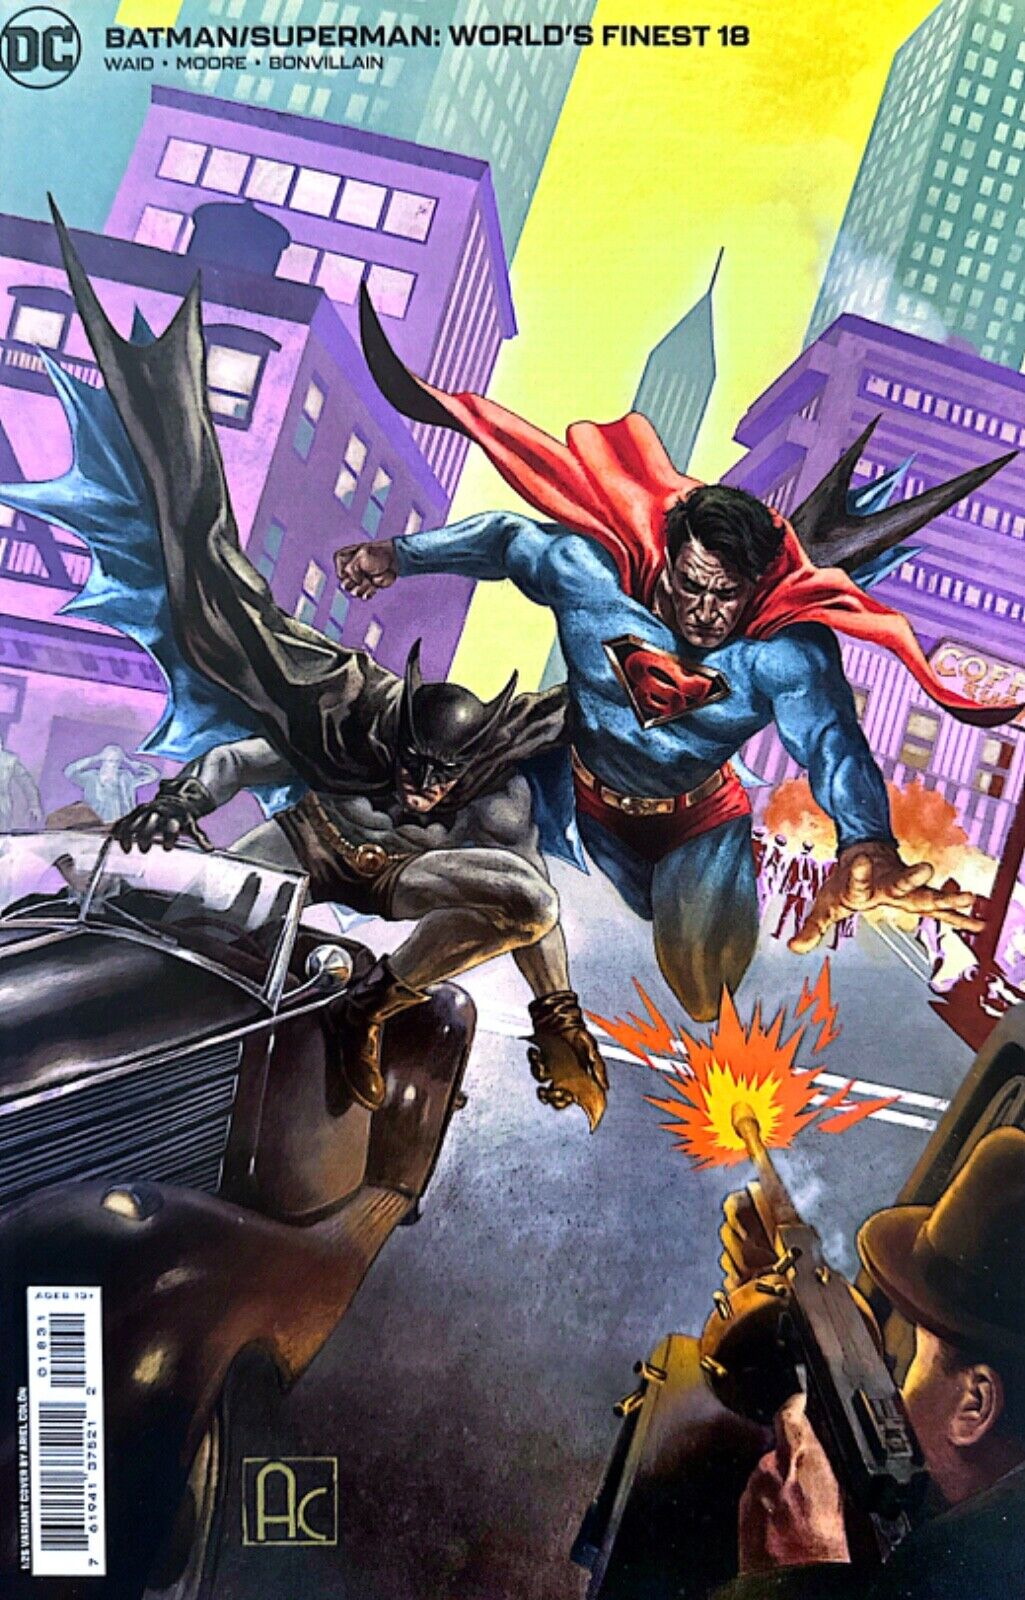 BATMAN SUPERMAN WORLDS FINEST #18 NM COVER E ARIEL COLON CARD STOCK INCENTIVE